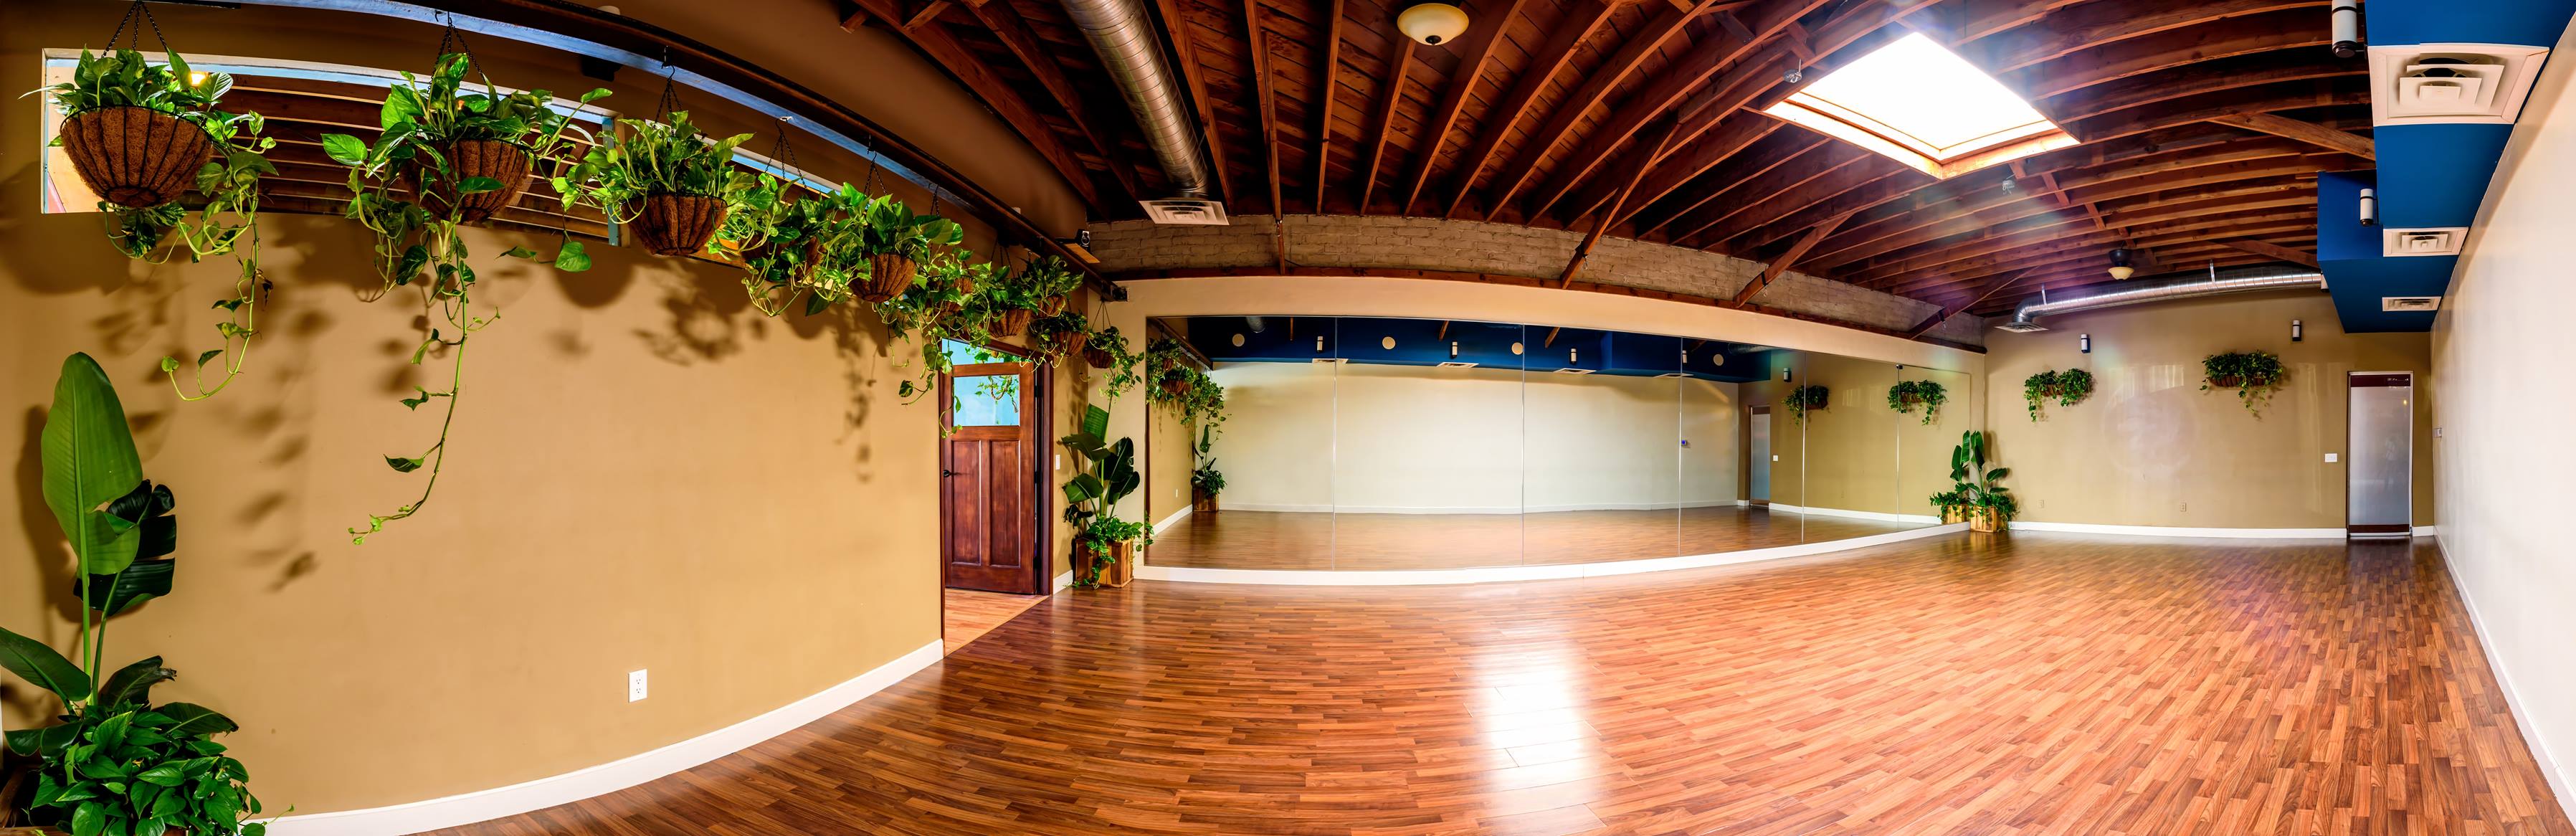 Spirit Yoga Studio San Diego